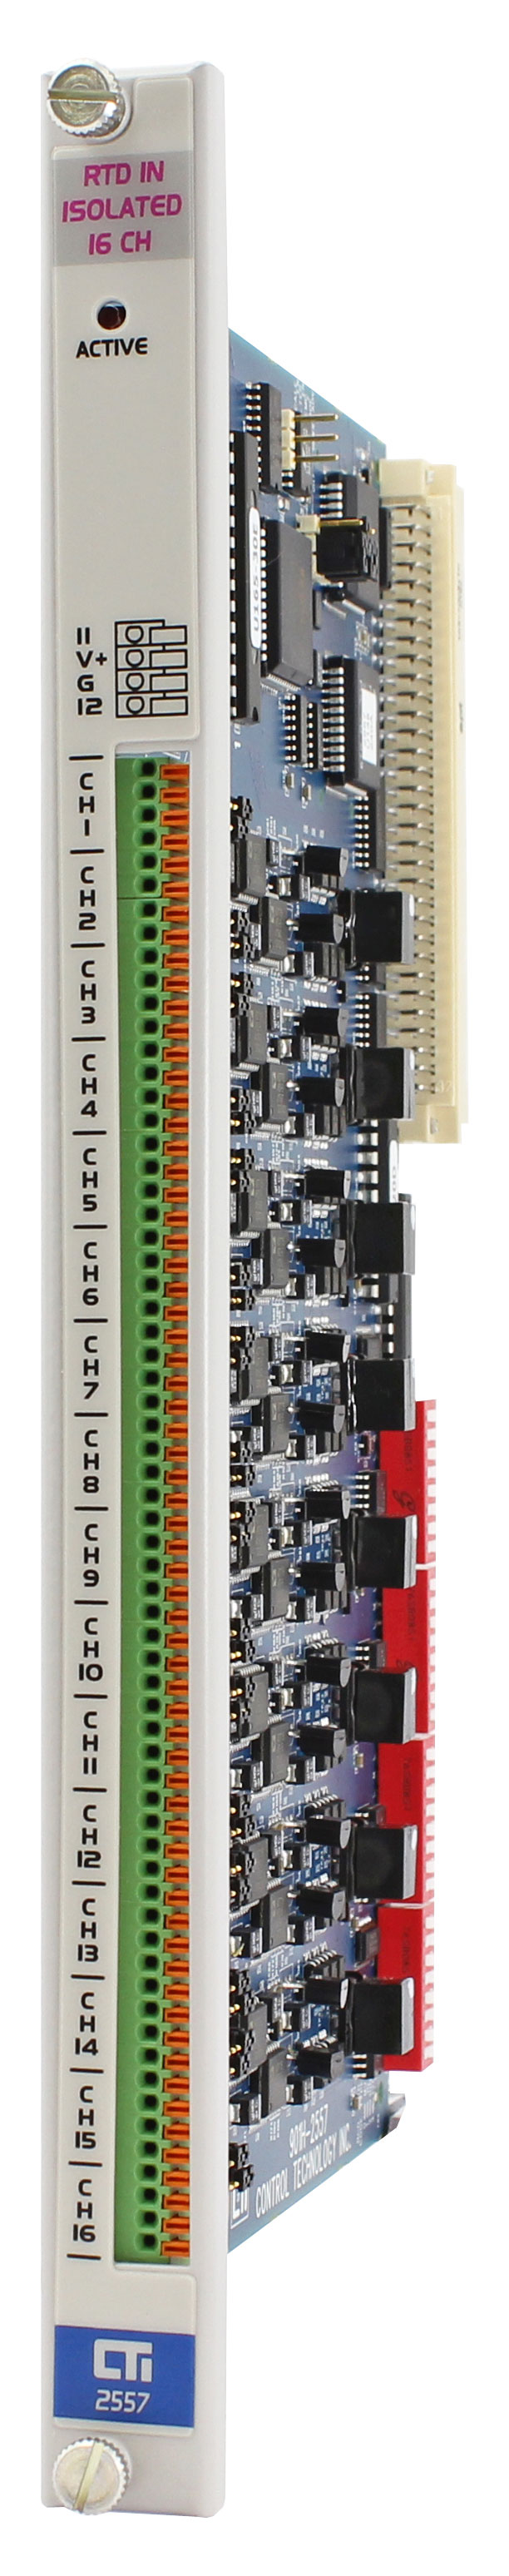 2557 16-Channel RTD Input Module (MATURE)